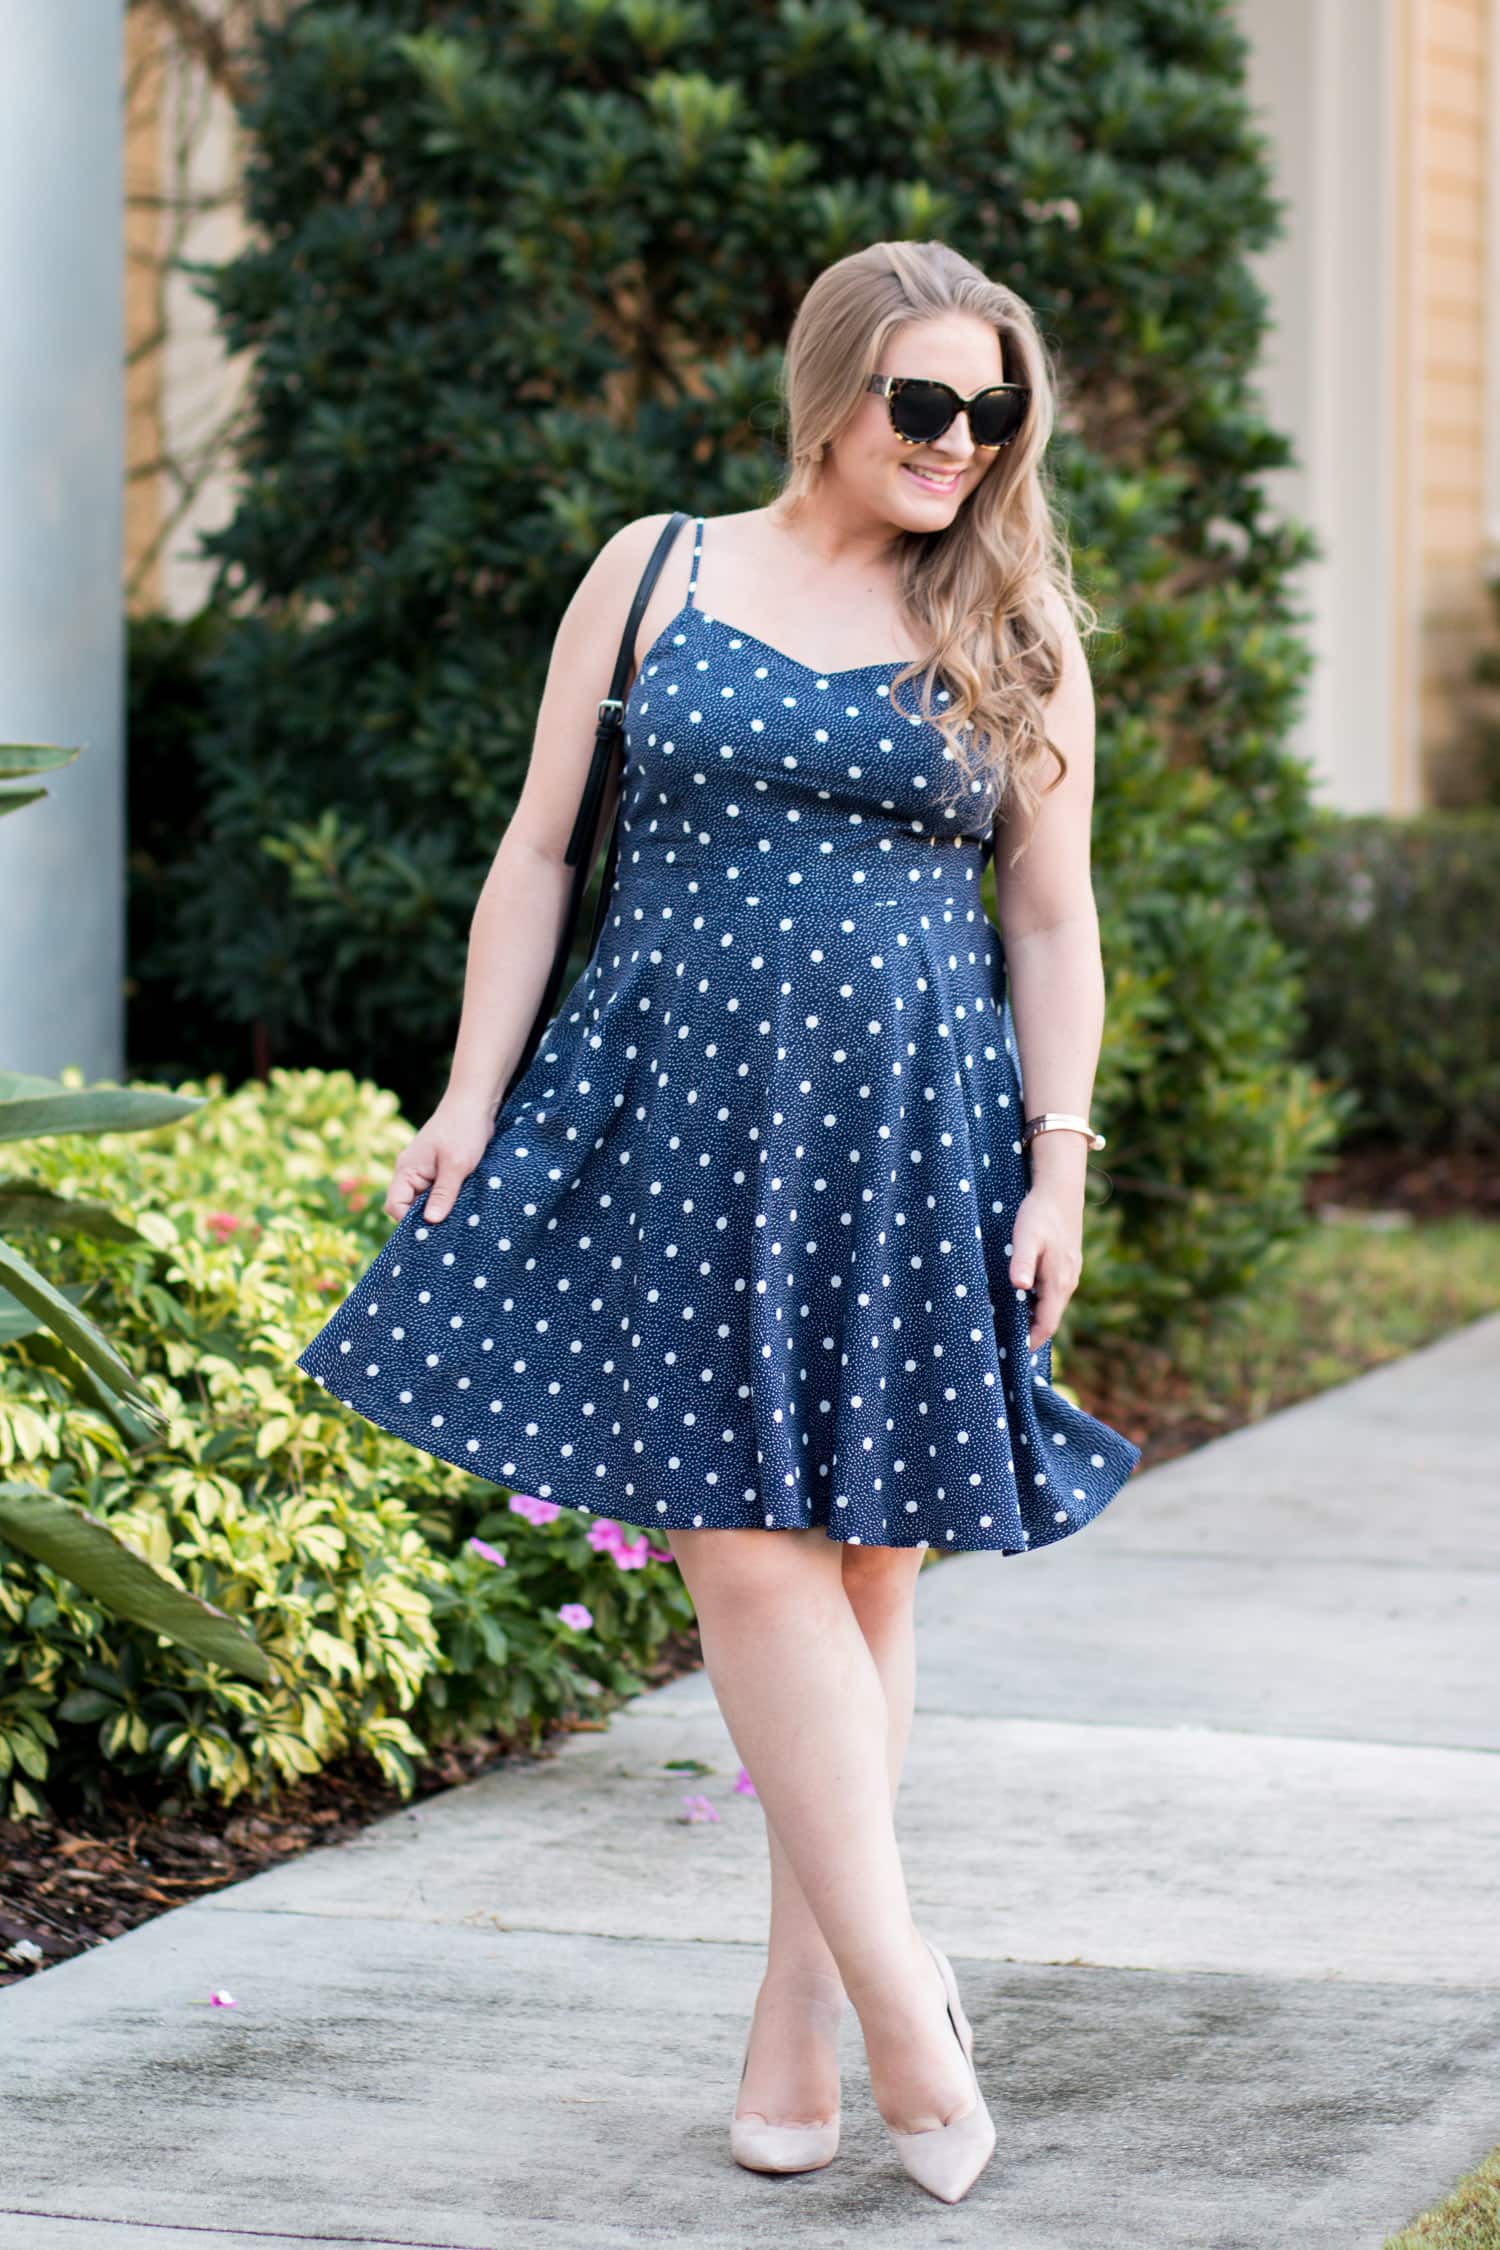 maternity style polka dot sun dress nude heels zappos shoes | Ashley Brooke Nicholas Florida style blogger